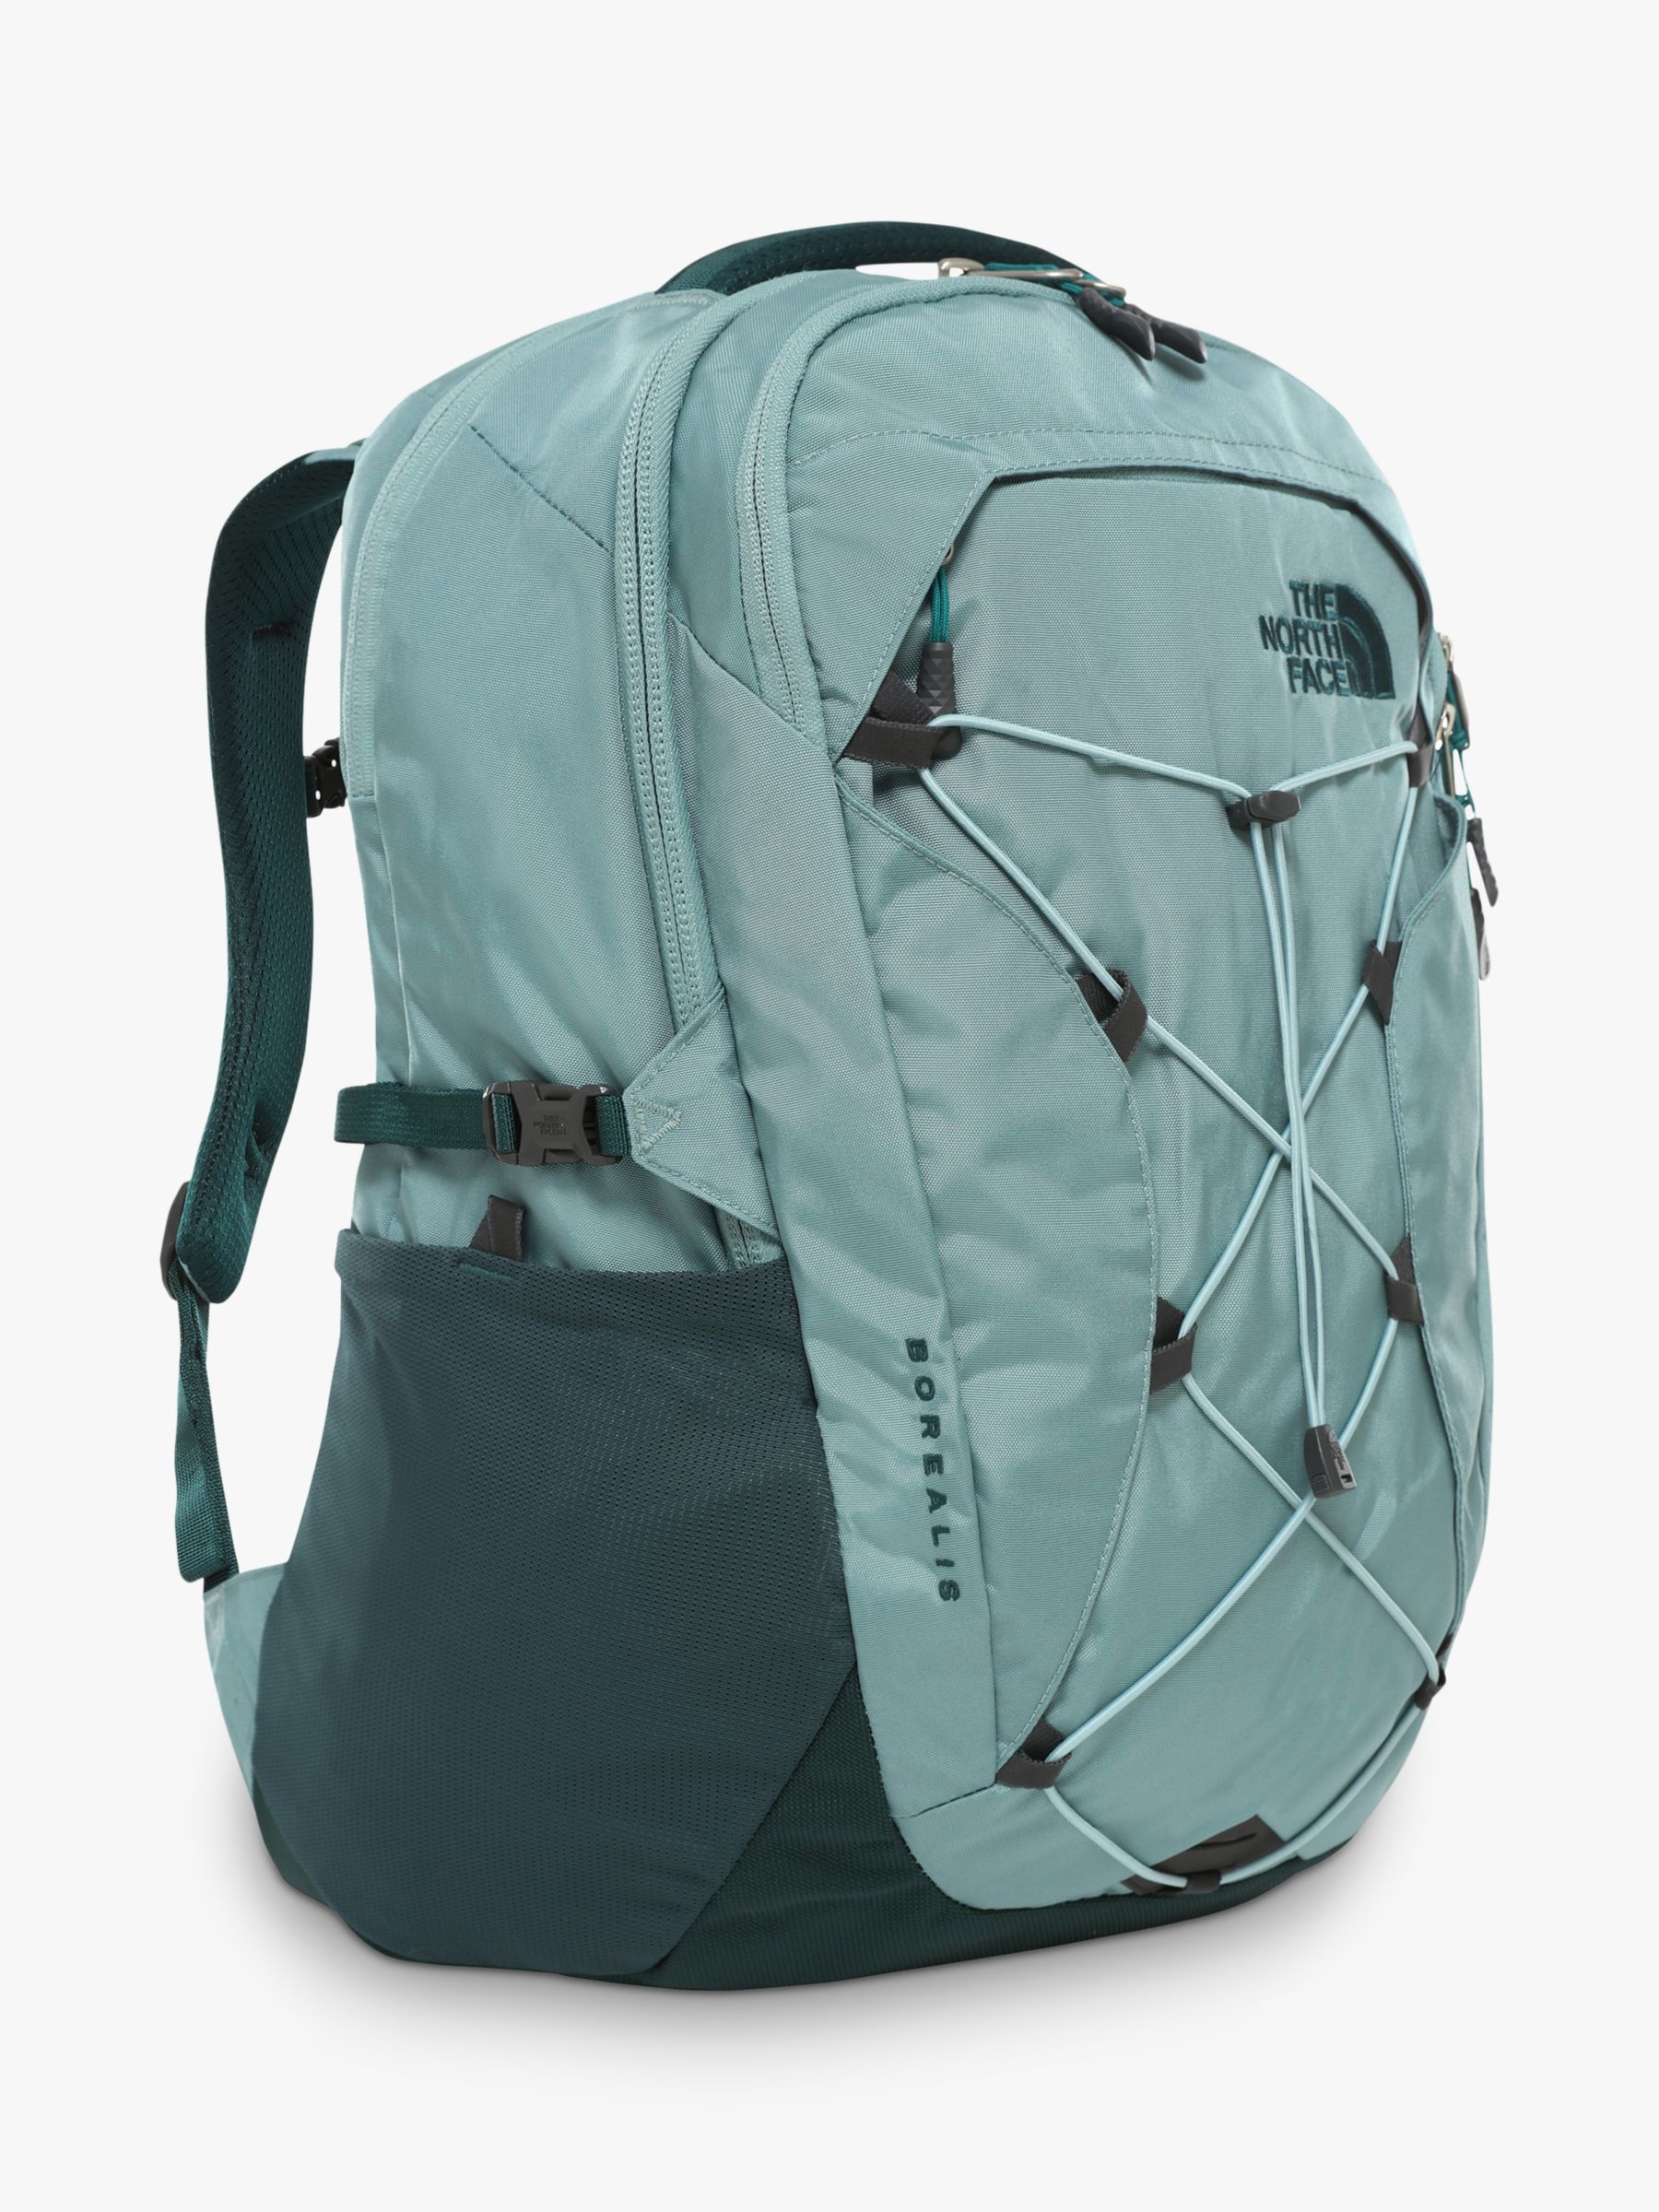 buy north face backpack online